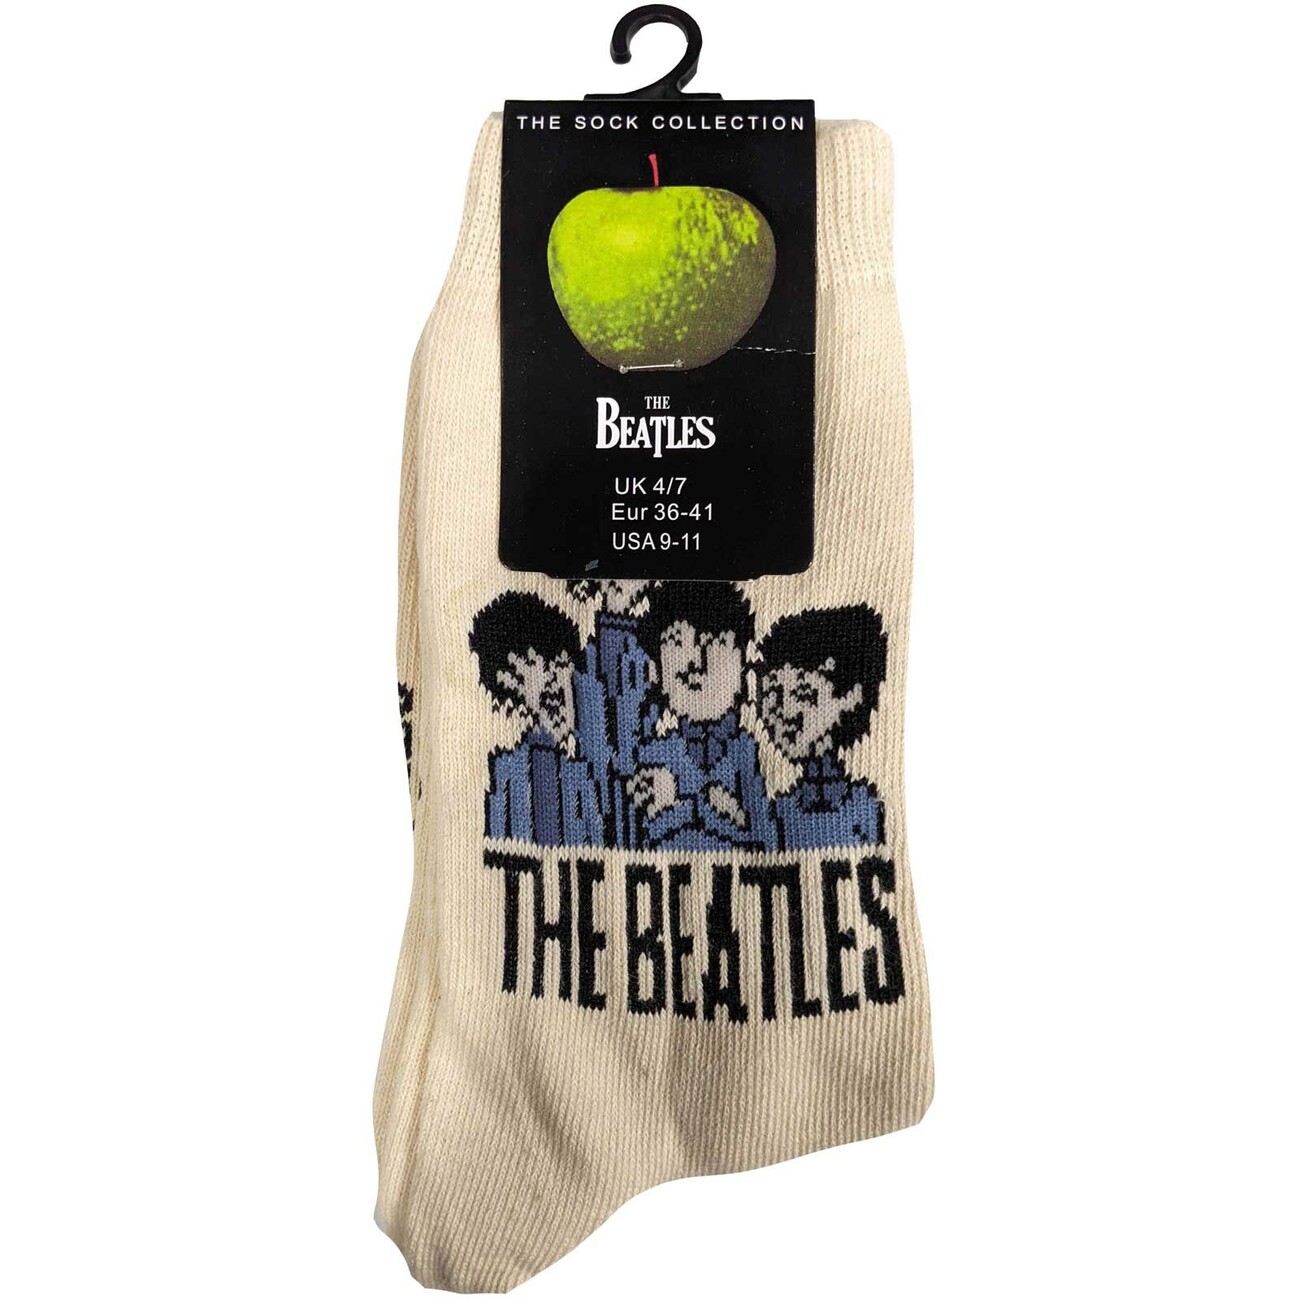 Sokker The Beatles - Carton | og tilbehør til merchandise fans | Europosters